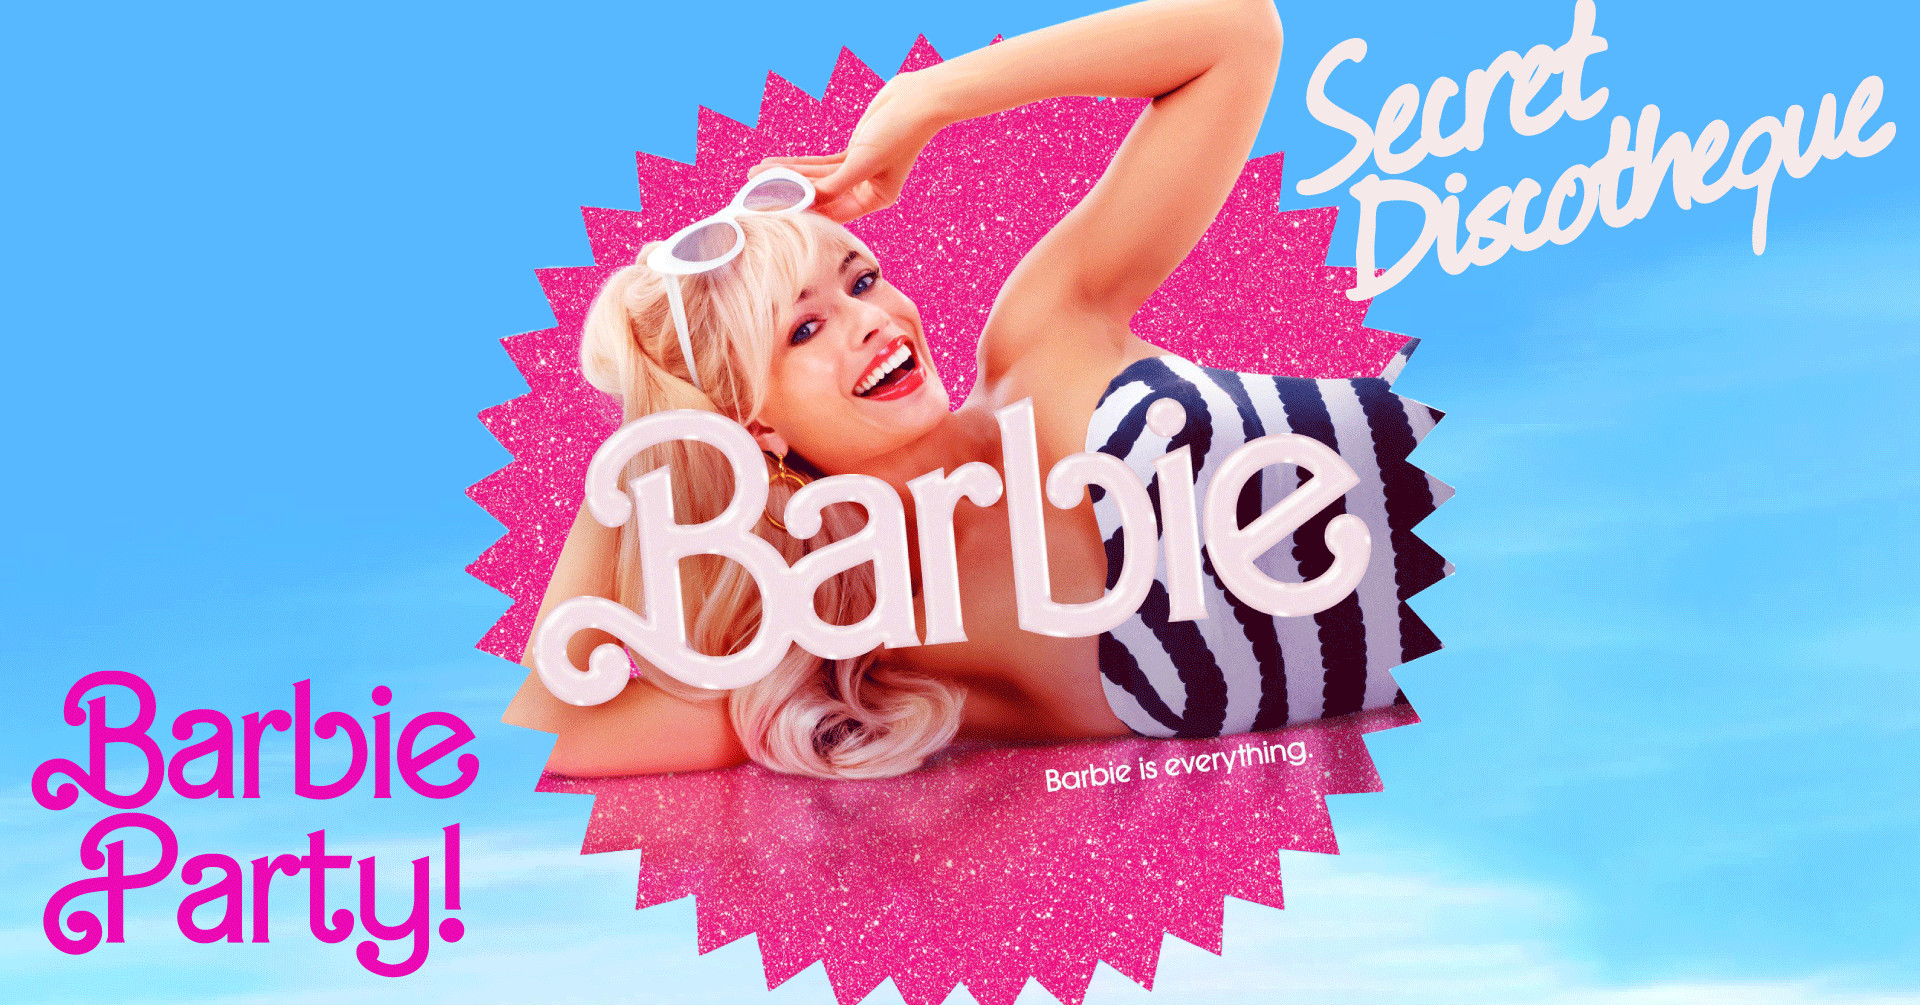 Secret Discotheque - Barbie Party